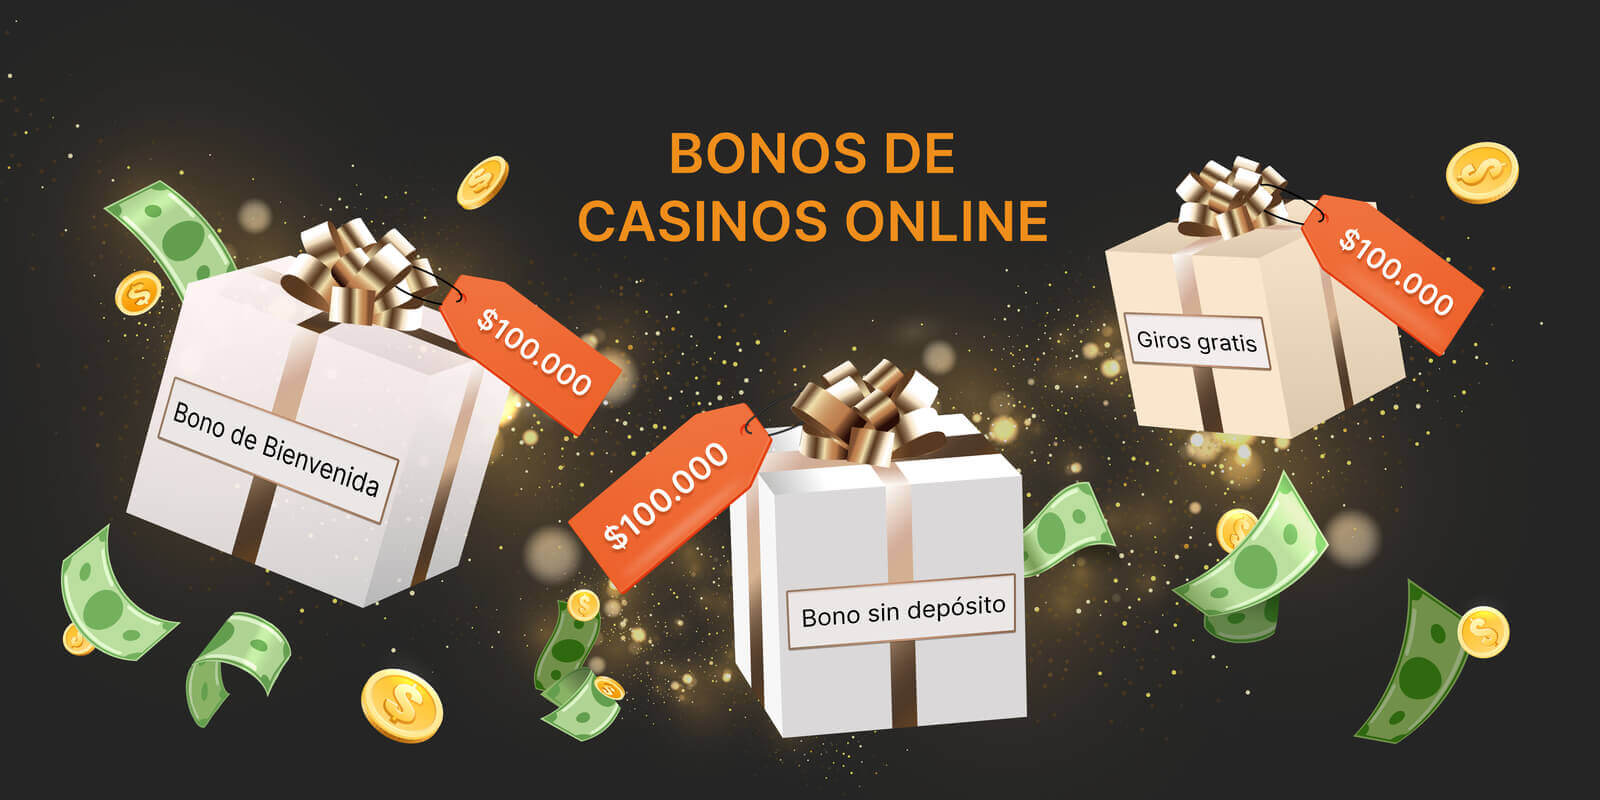 Bonos de Casino online en Latinoamérica